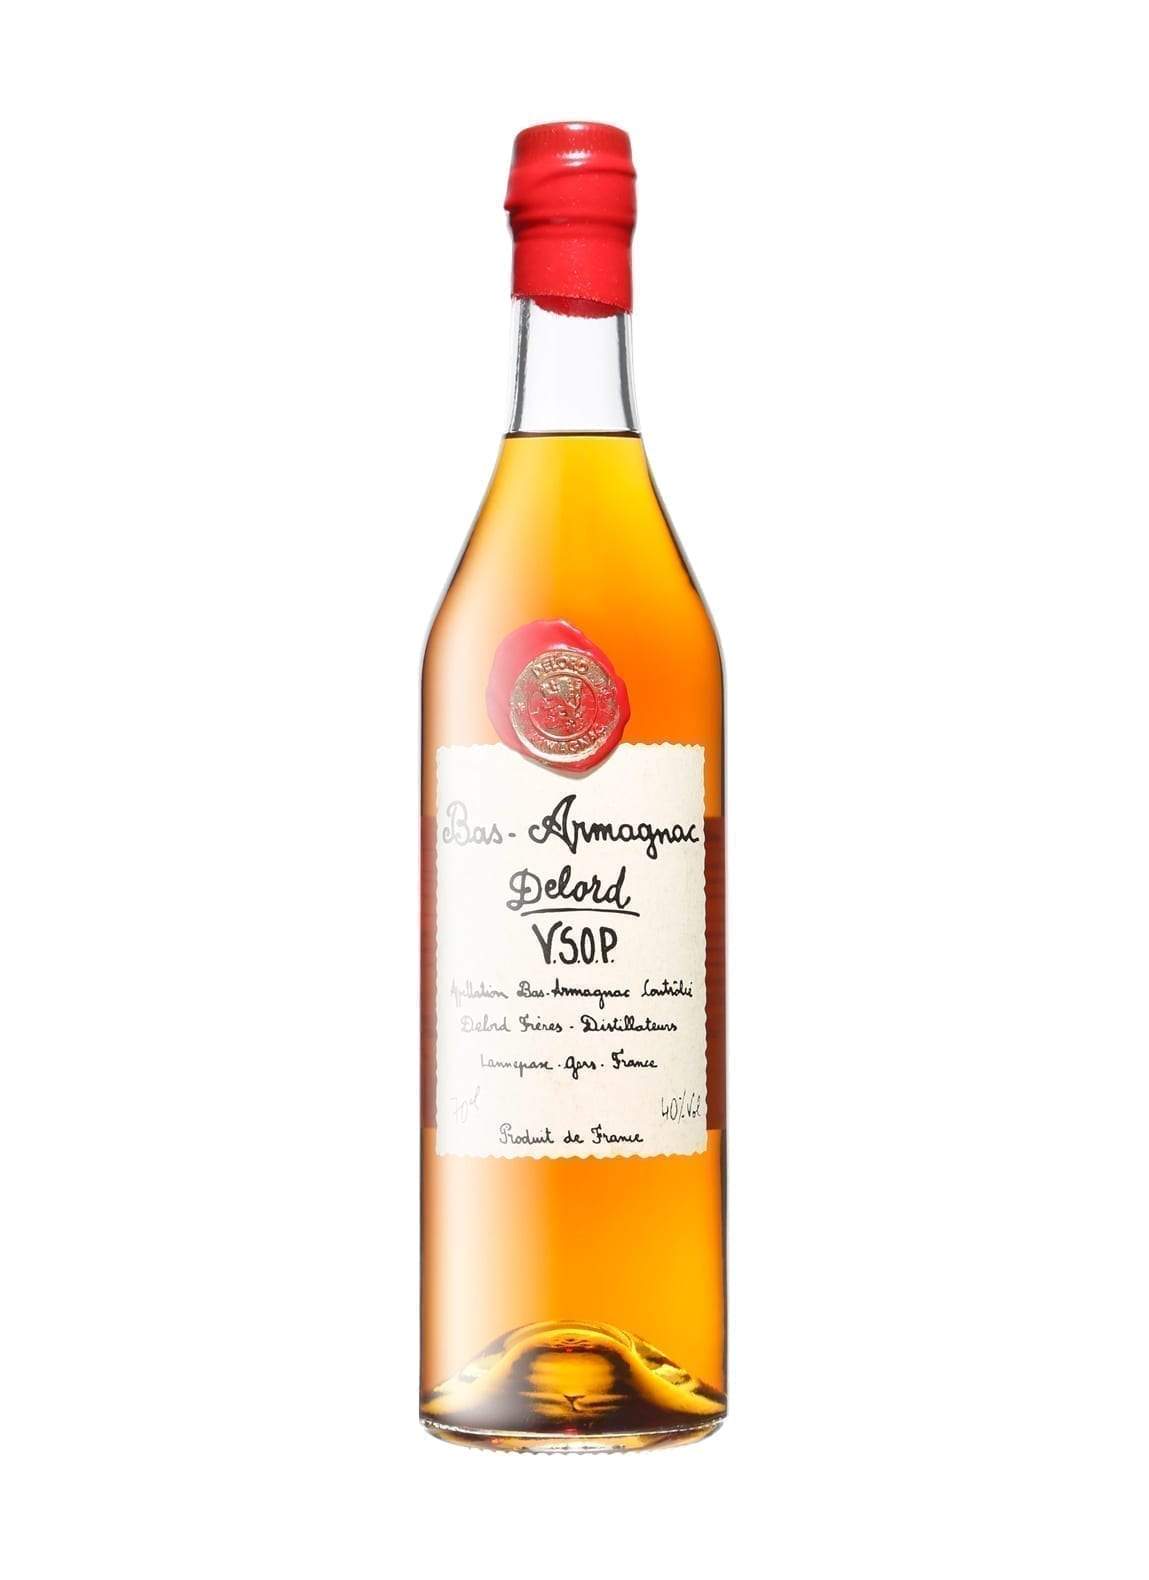 Delord Bas Armagnac VSOP 40% 700ml | Brandy | Shop online at Spirits of France